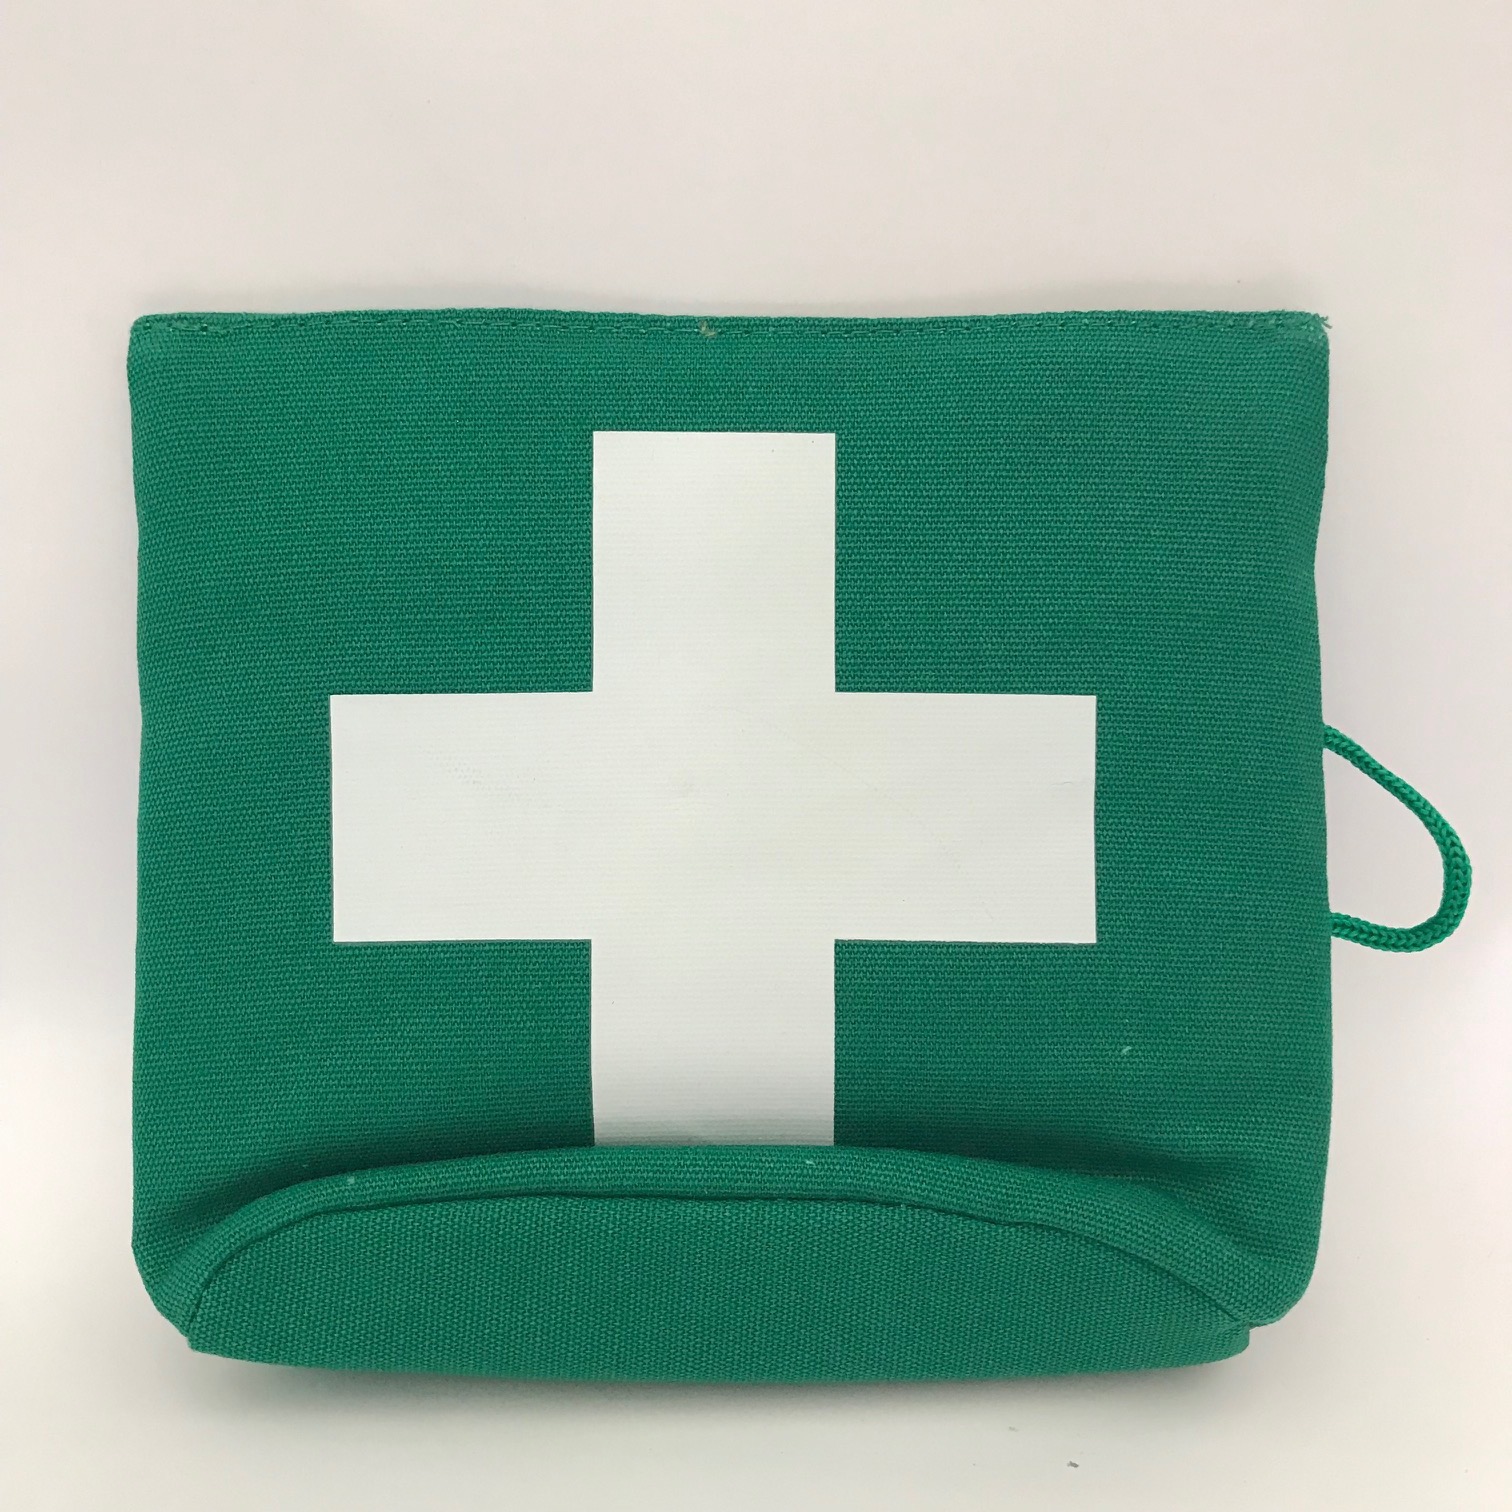 Green Medical Bag